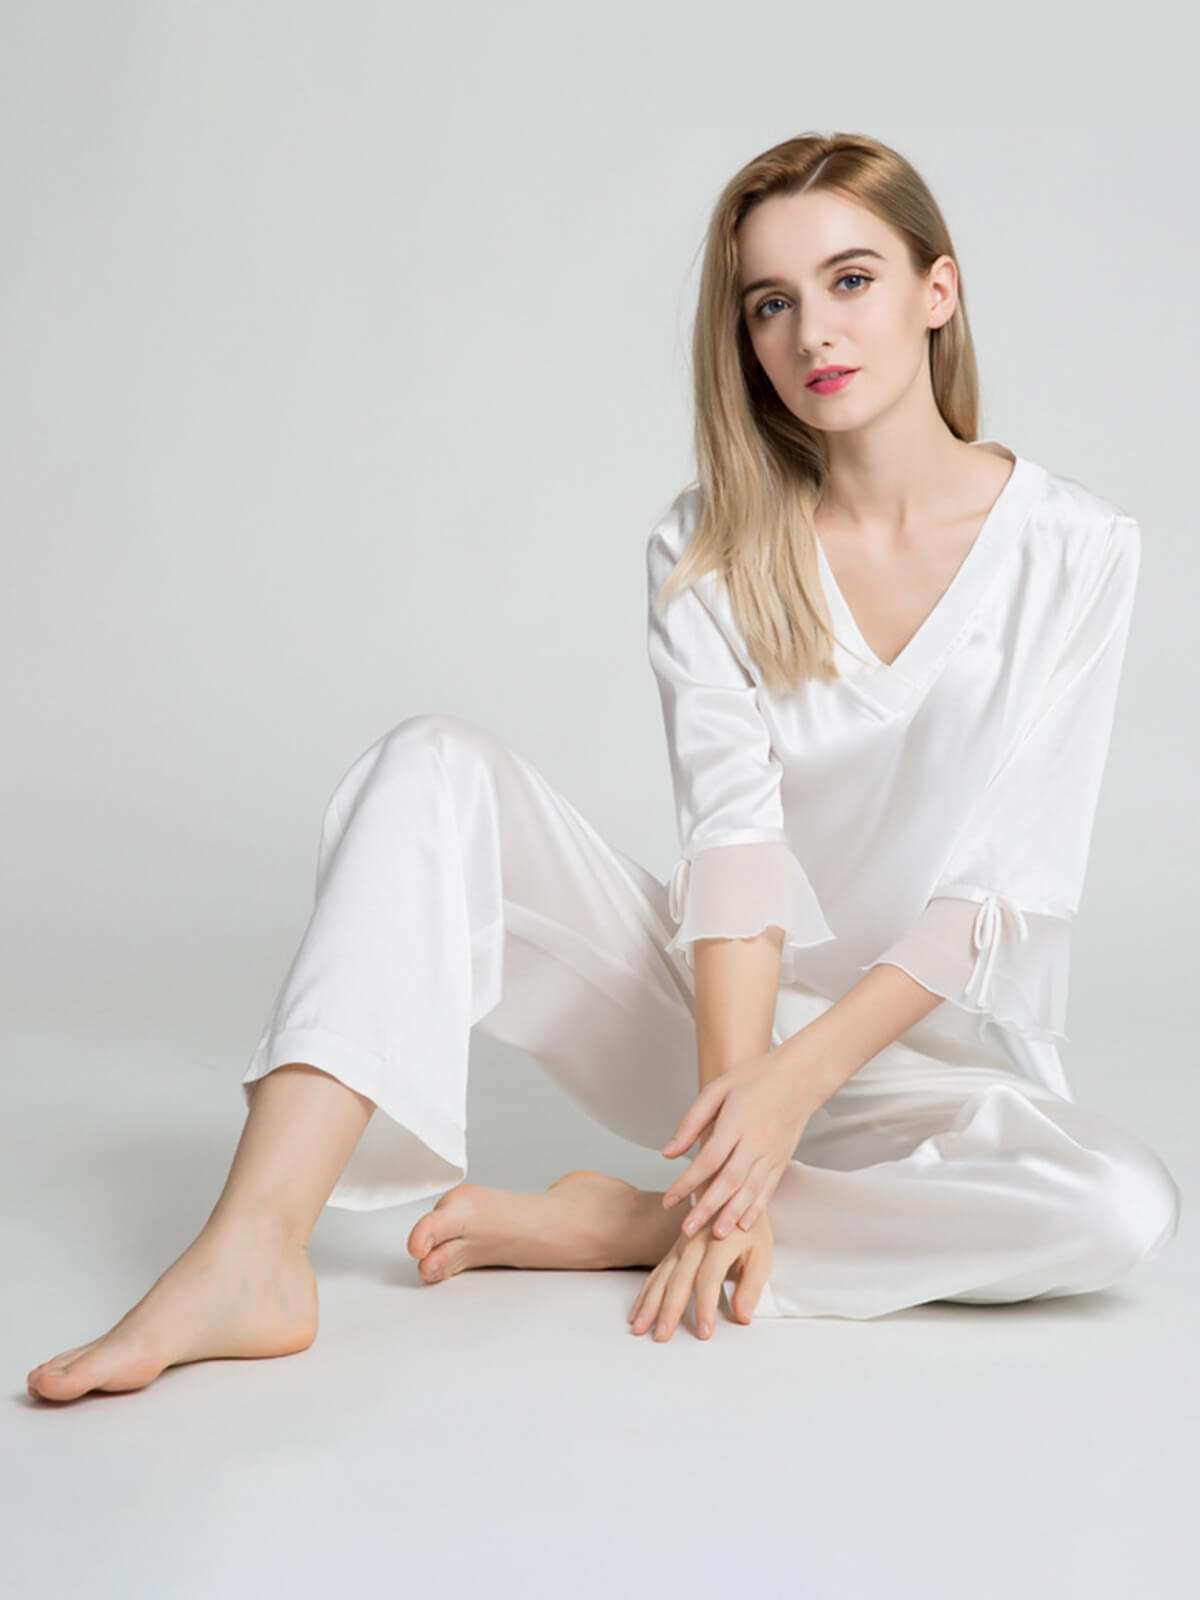 19 Momme Half Sleeve Pure Silk Pajamas Set with Ruffles